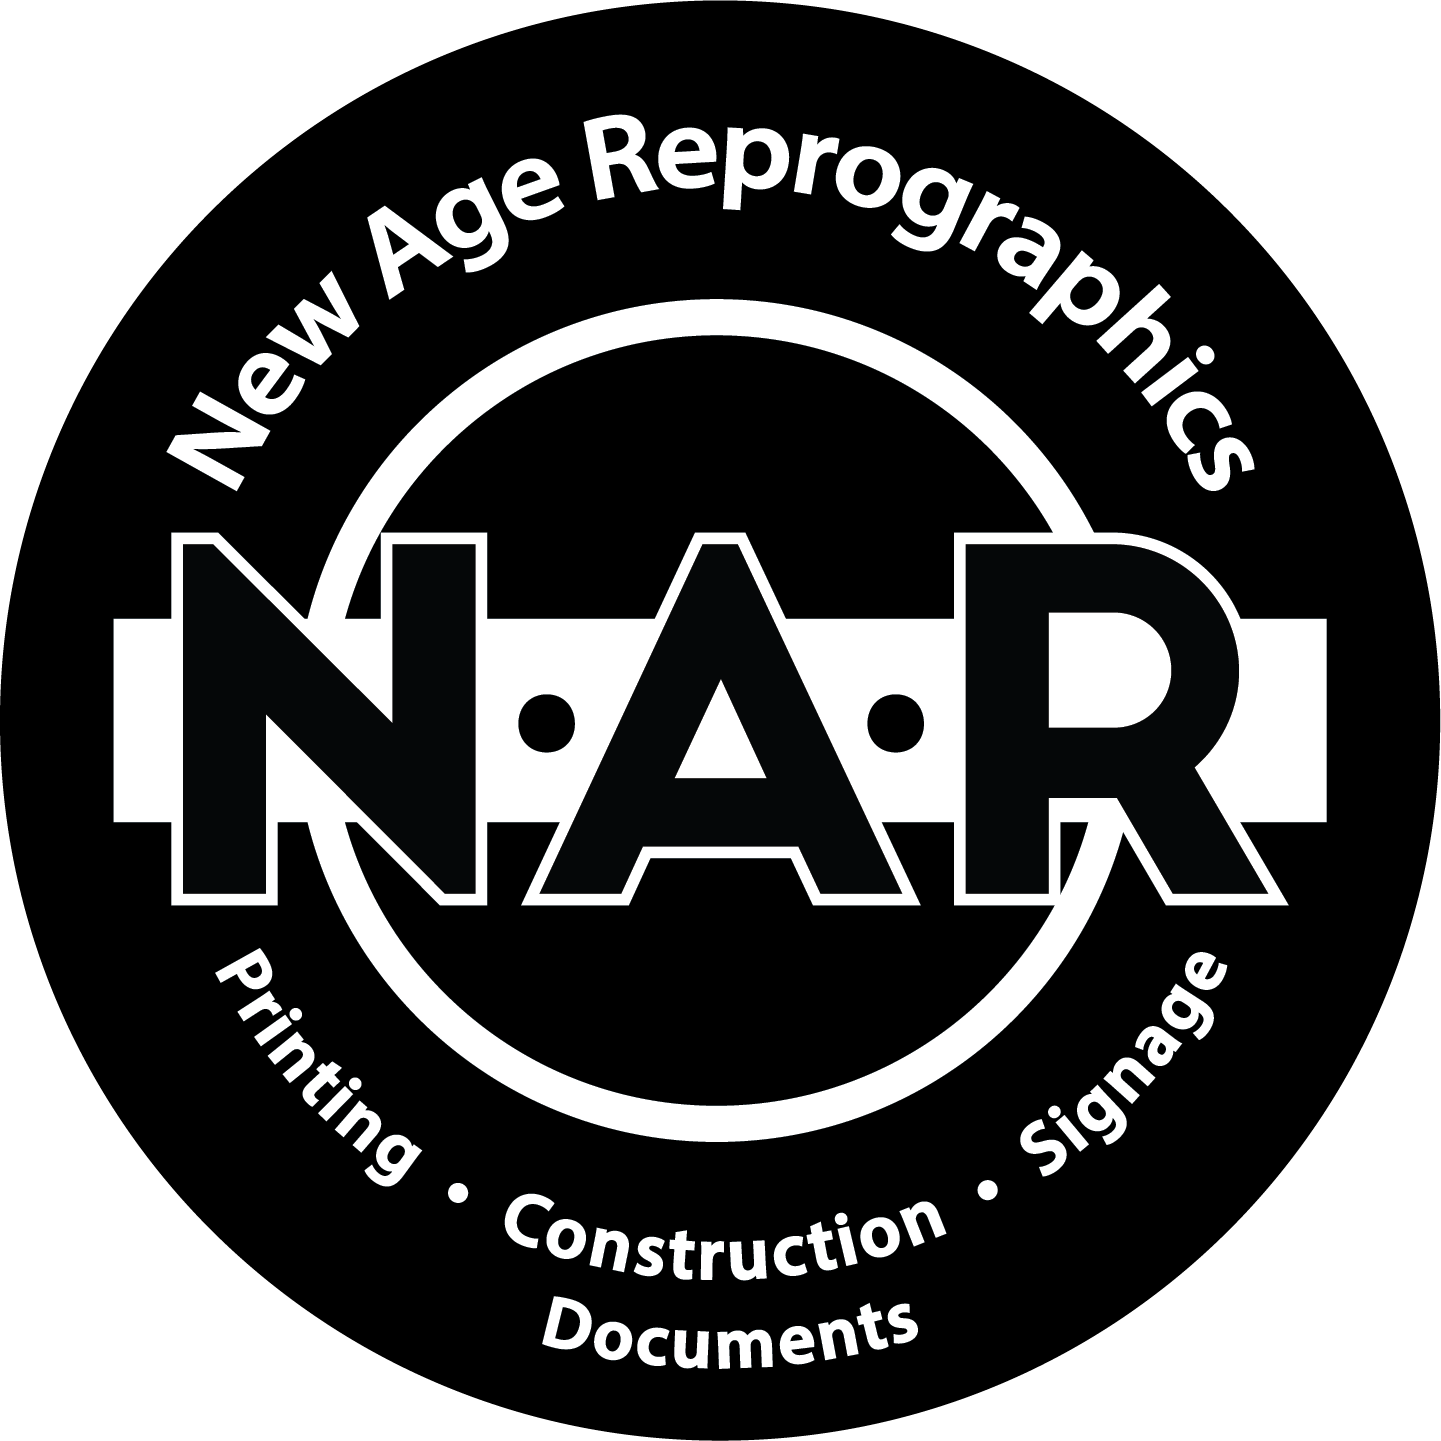 New Age Reprographics